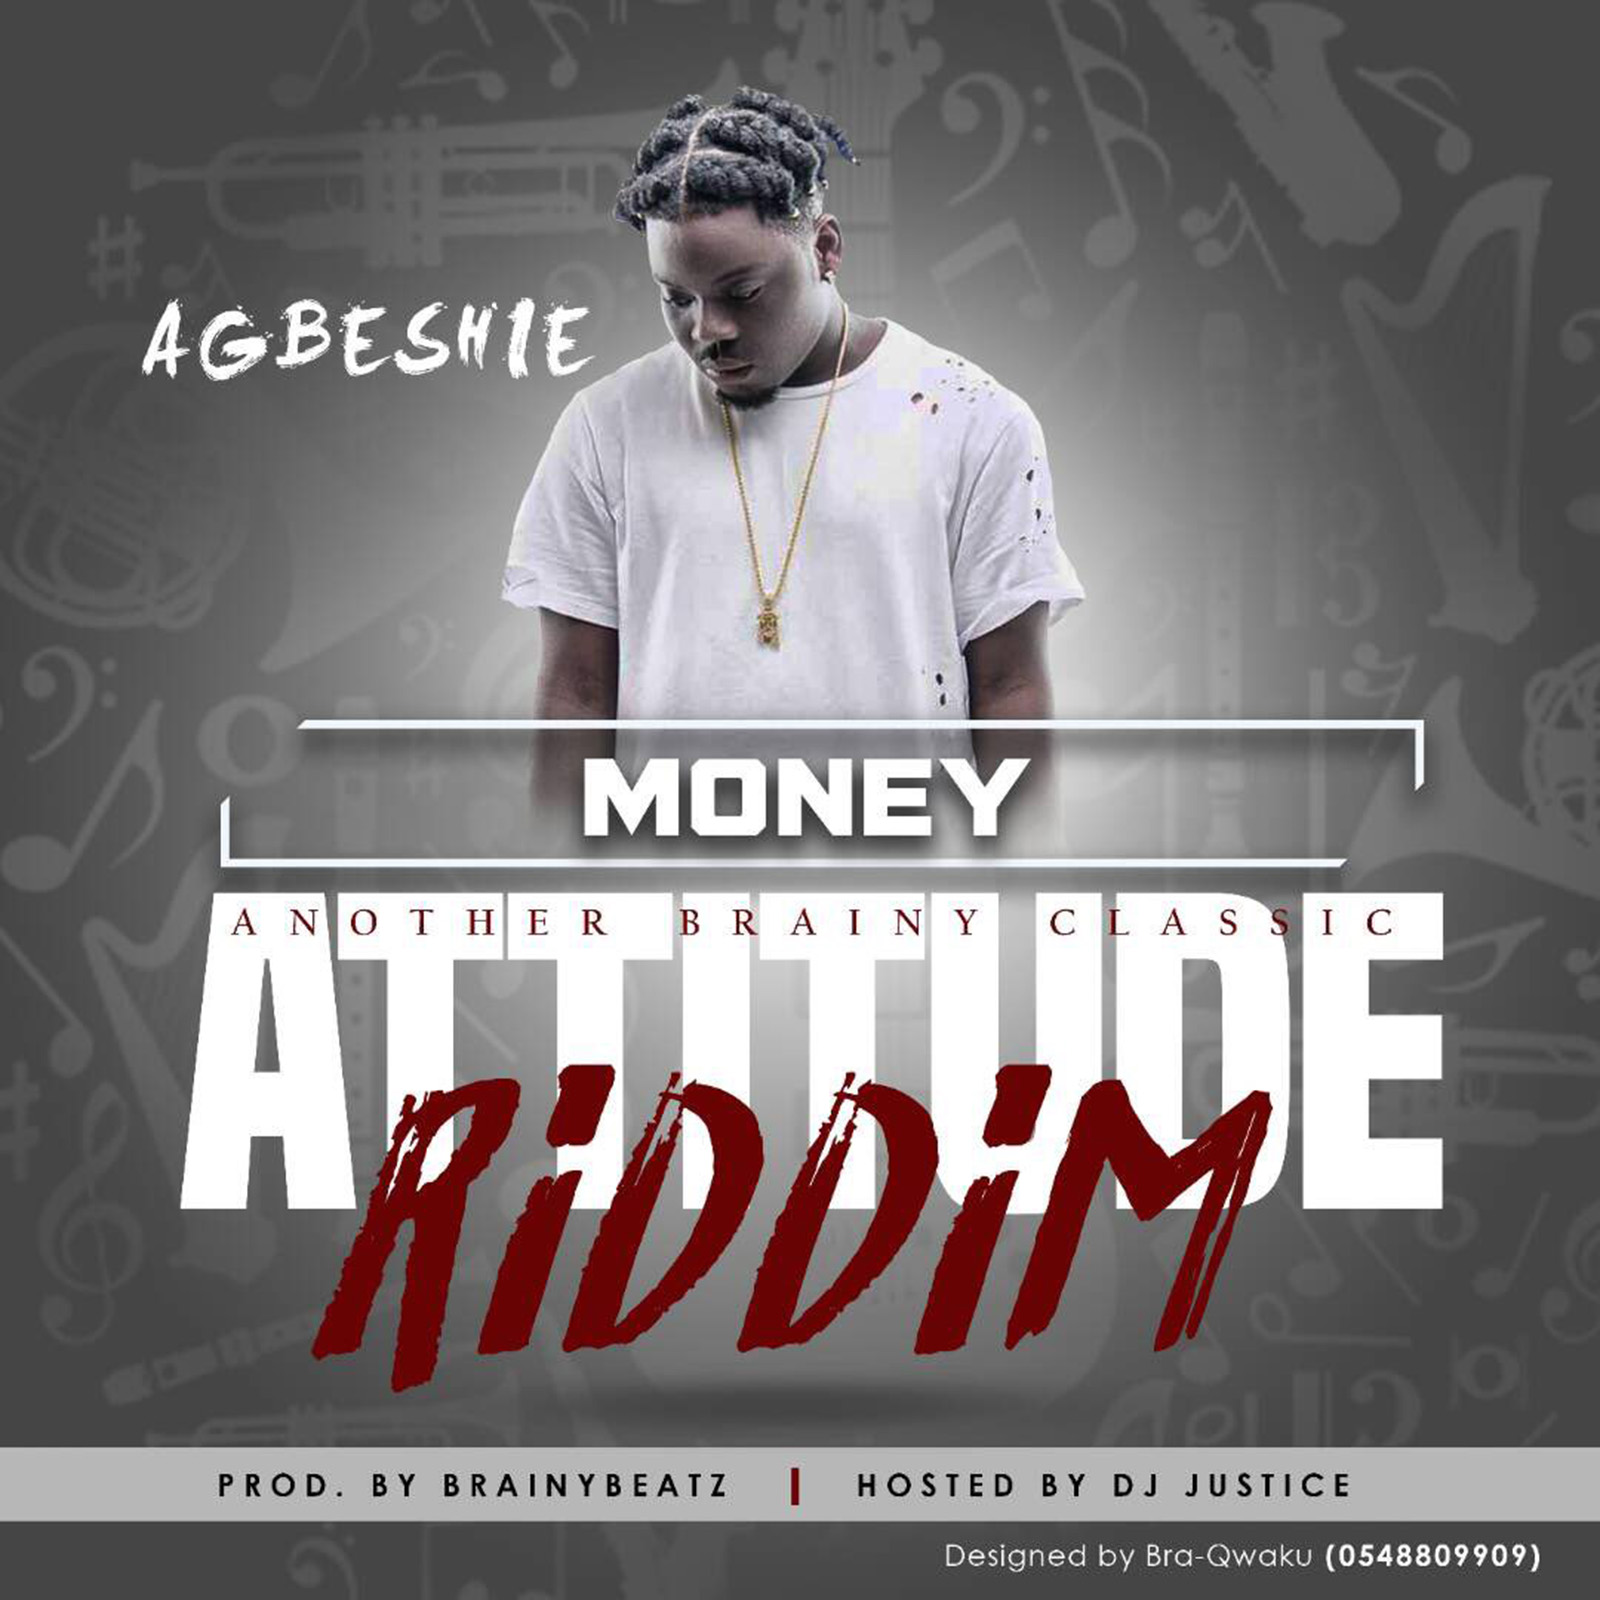 Money (Attitude Riddim) by Agbeshie